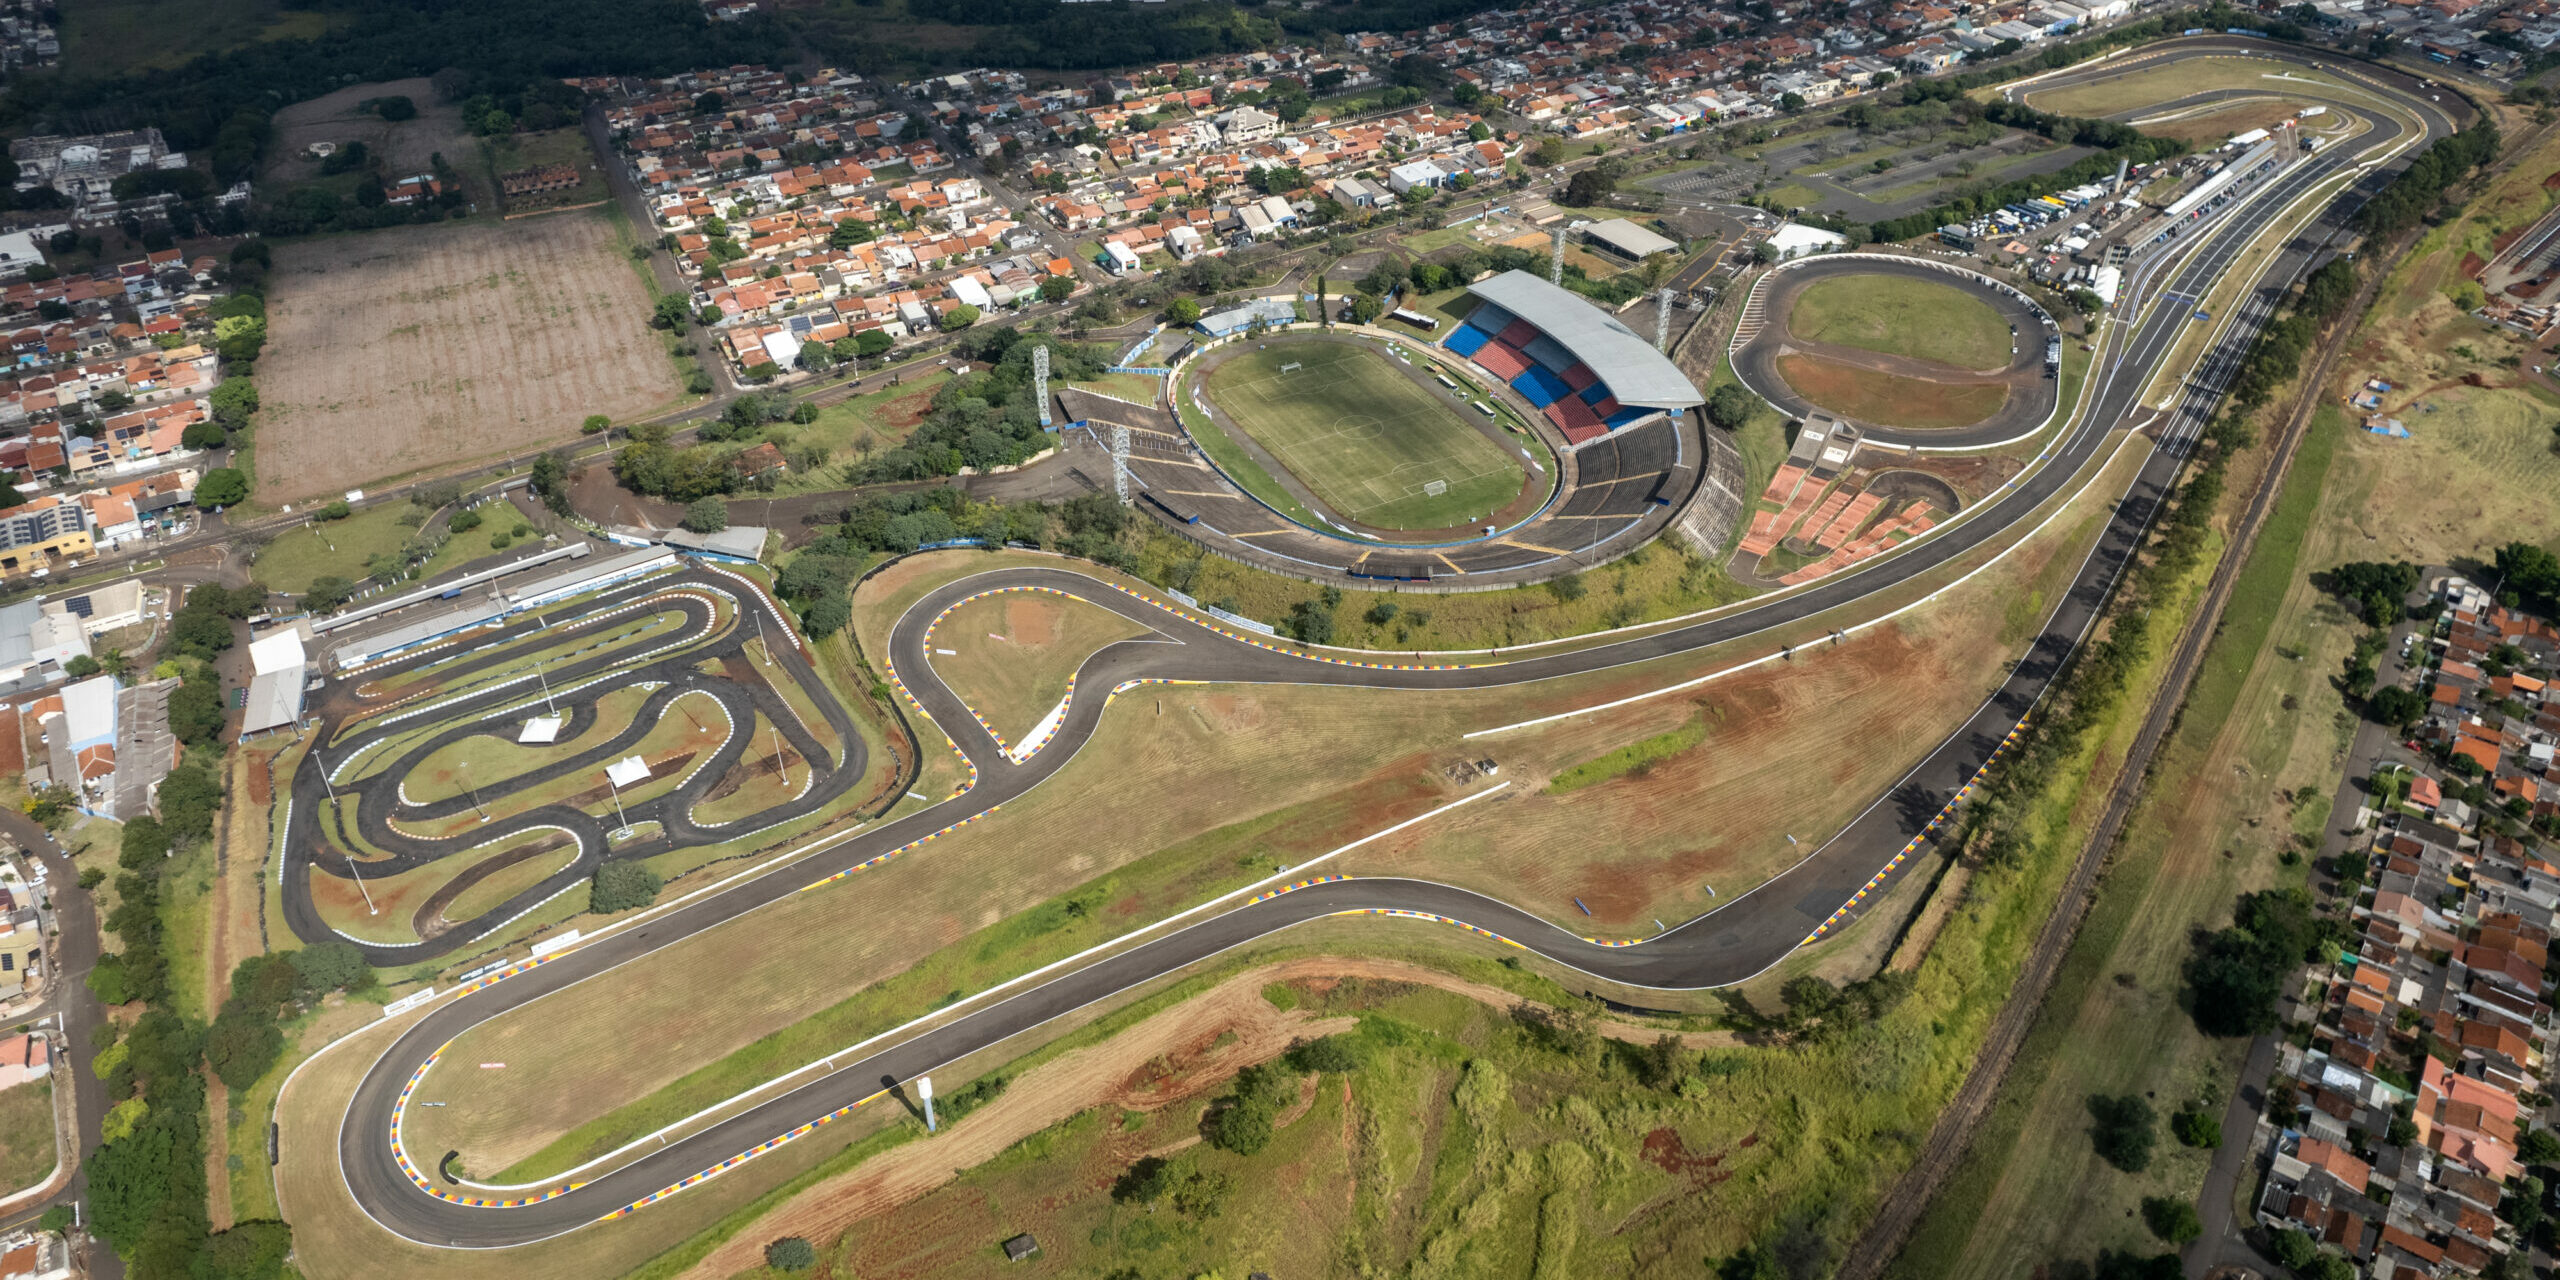 #InfoTruck Londrina: todos os resultados das corridas já realizadas